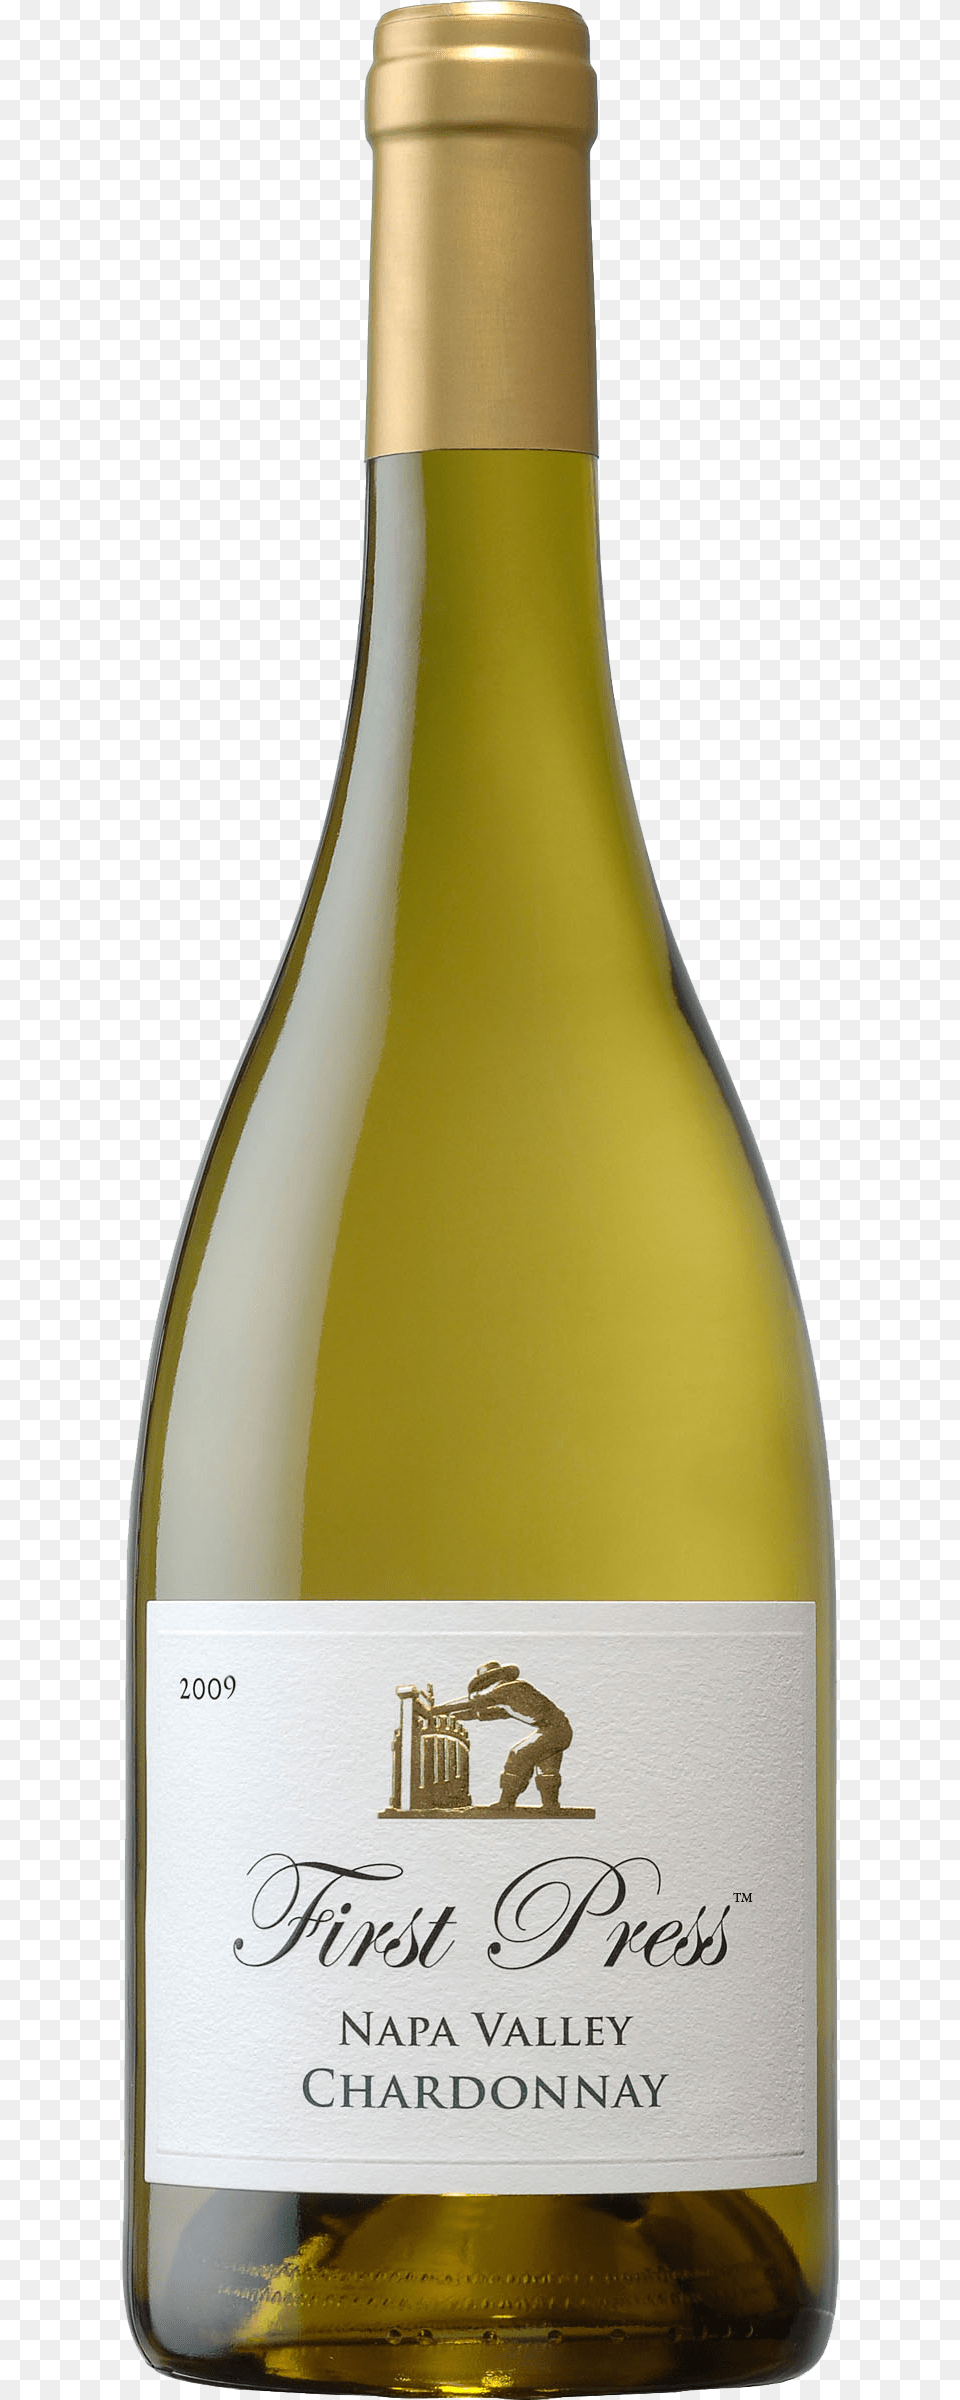 Wine Bottle Image J Moreau Amp Fils Chablis 2014, Alcohol, Beverage, Liquor, Wine Bottle Free Transparent Png